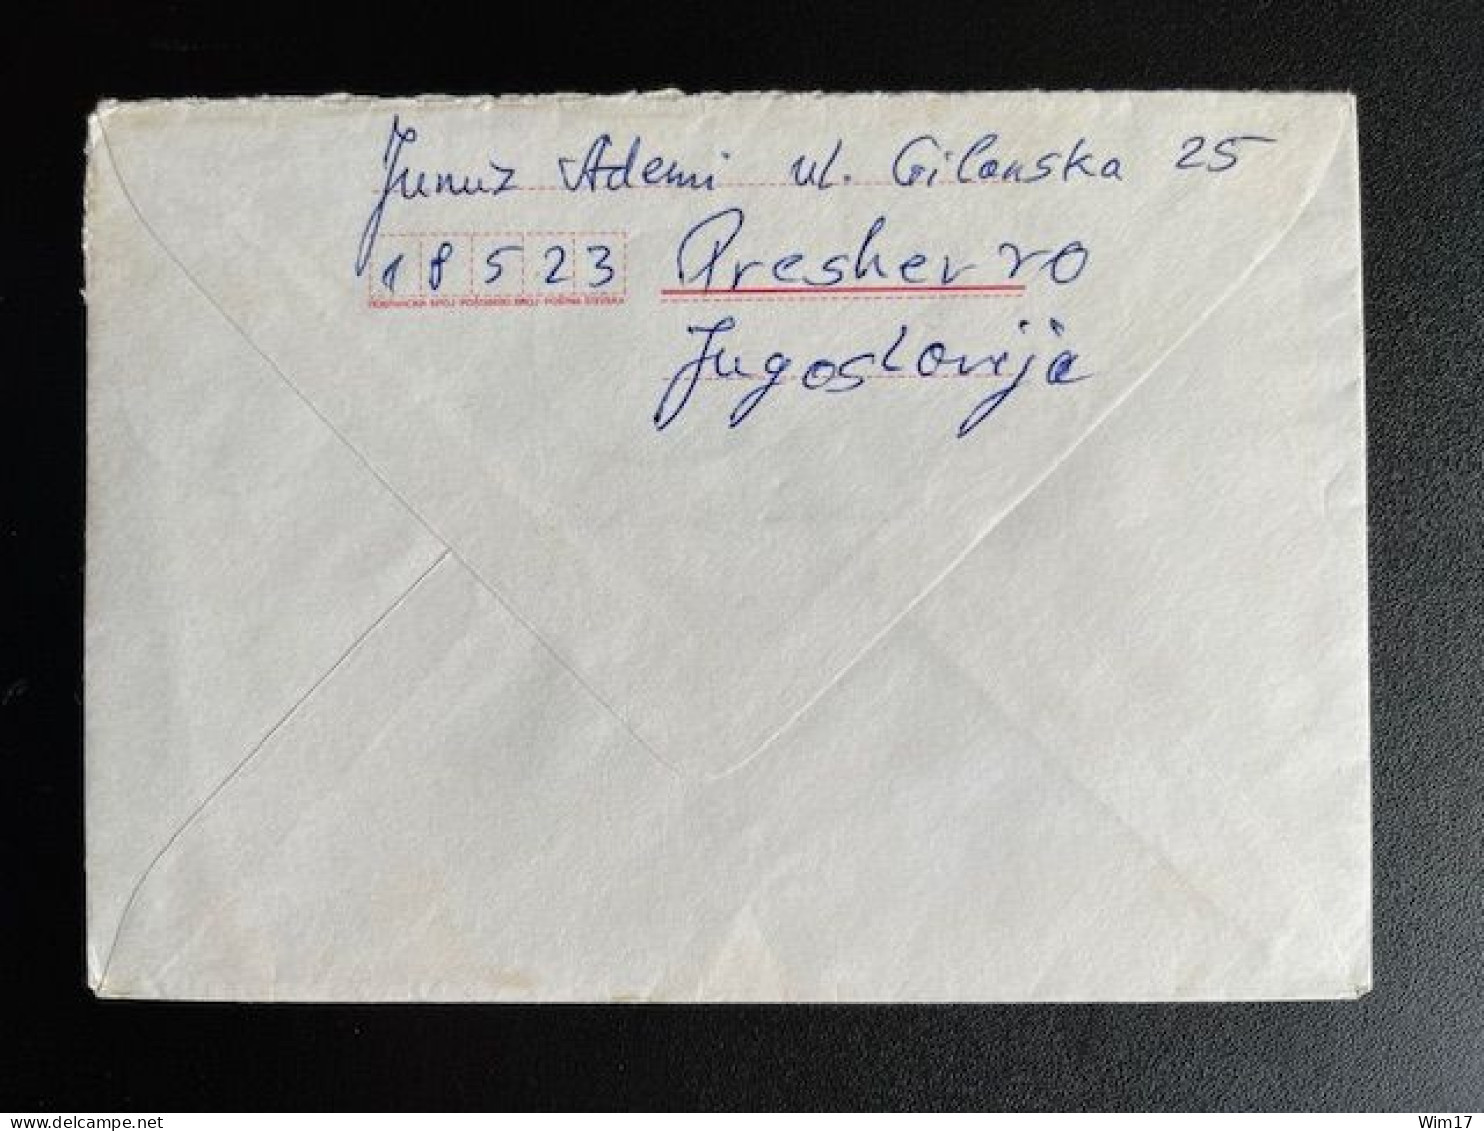 JUGOSLAVIJA YUGOSLAVIA 1979 REGISTERED LETTER PRESEVO TO WUPPERTAL 23-08-1979 - Covers & Documents